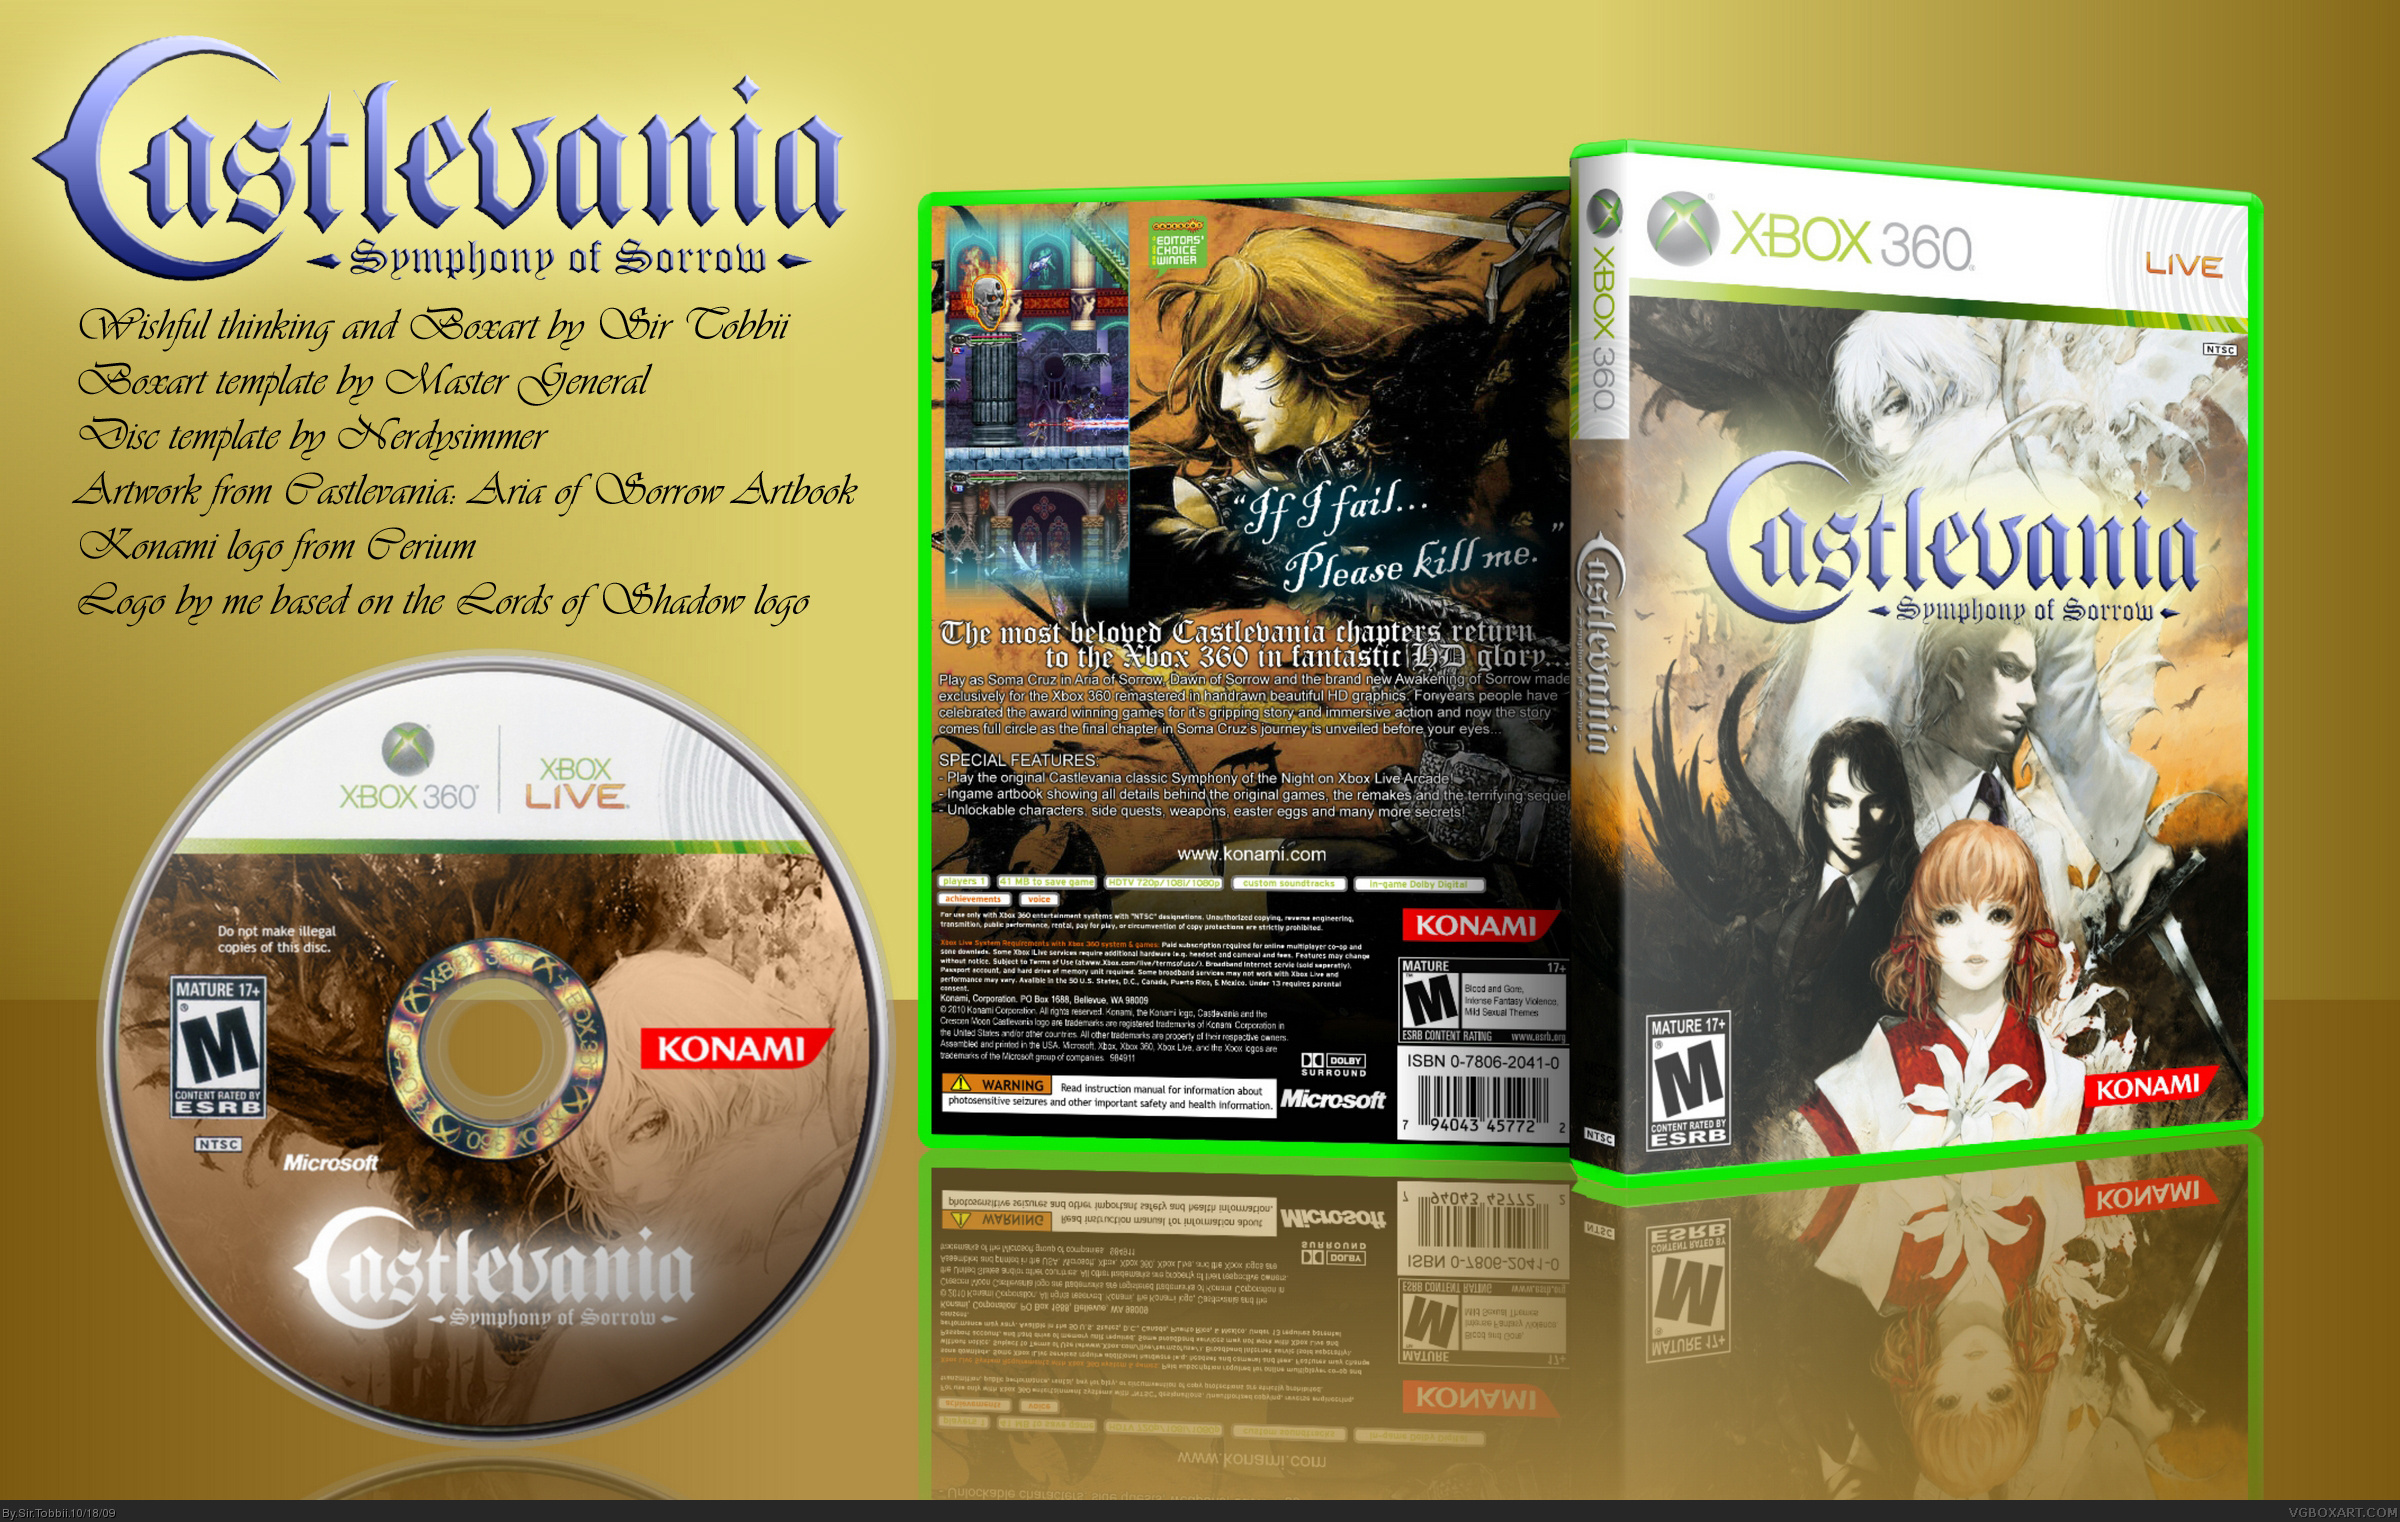 Castlevania: Symphony of Sorrow box cover